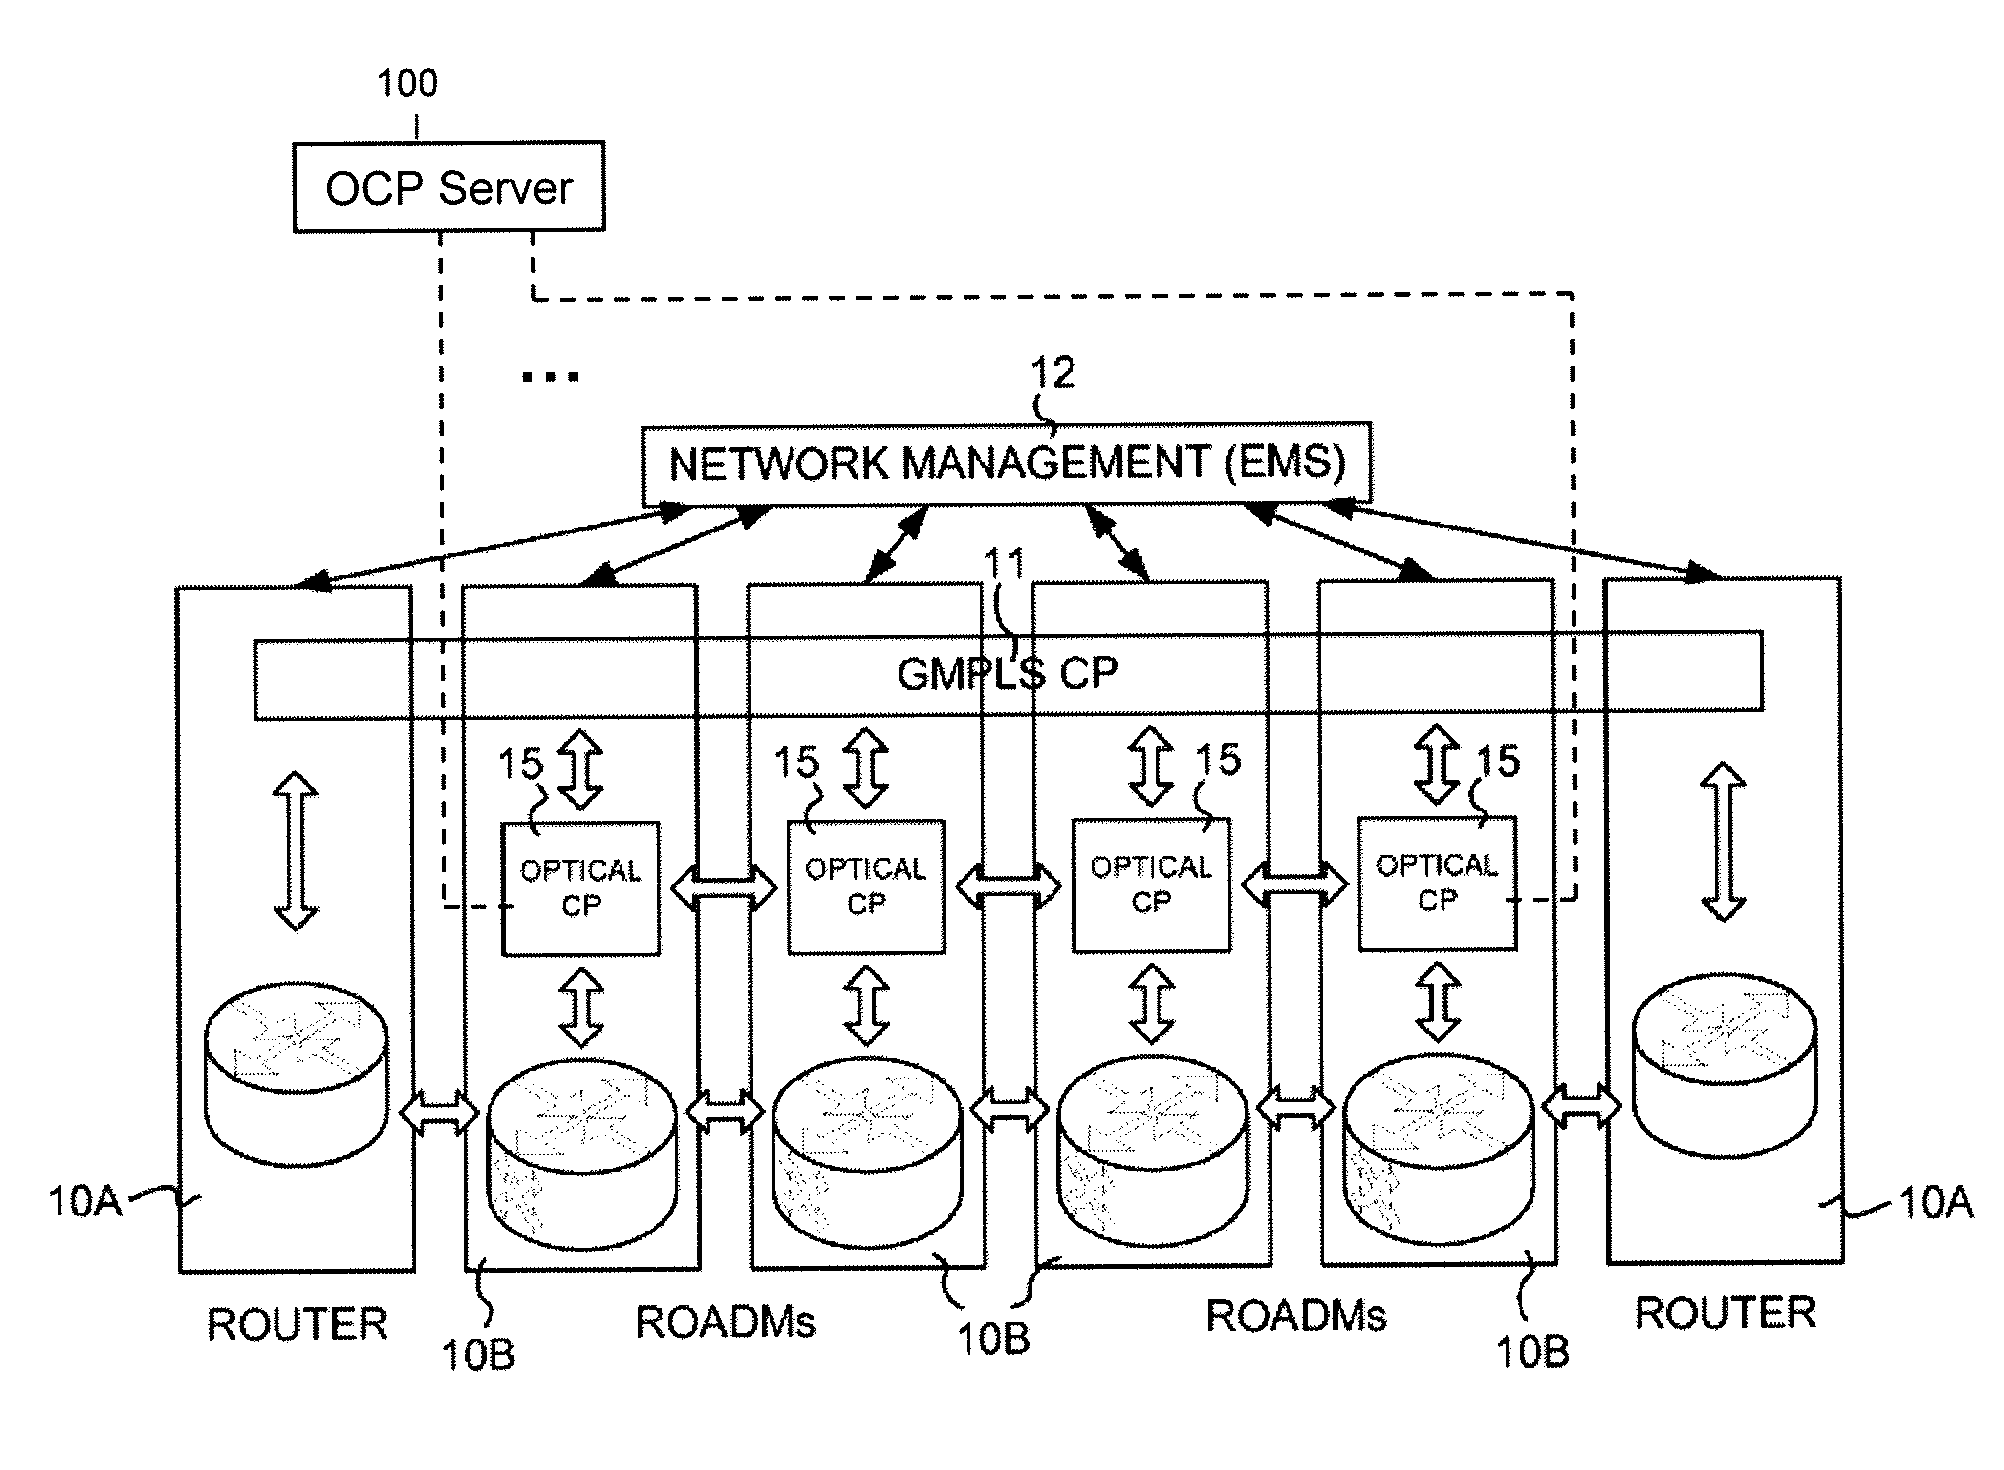 Adaptive hybrid optical control plane determination of lightpaths in a DWDM network